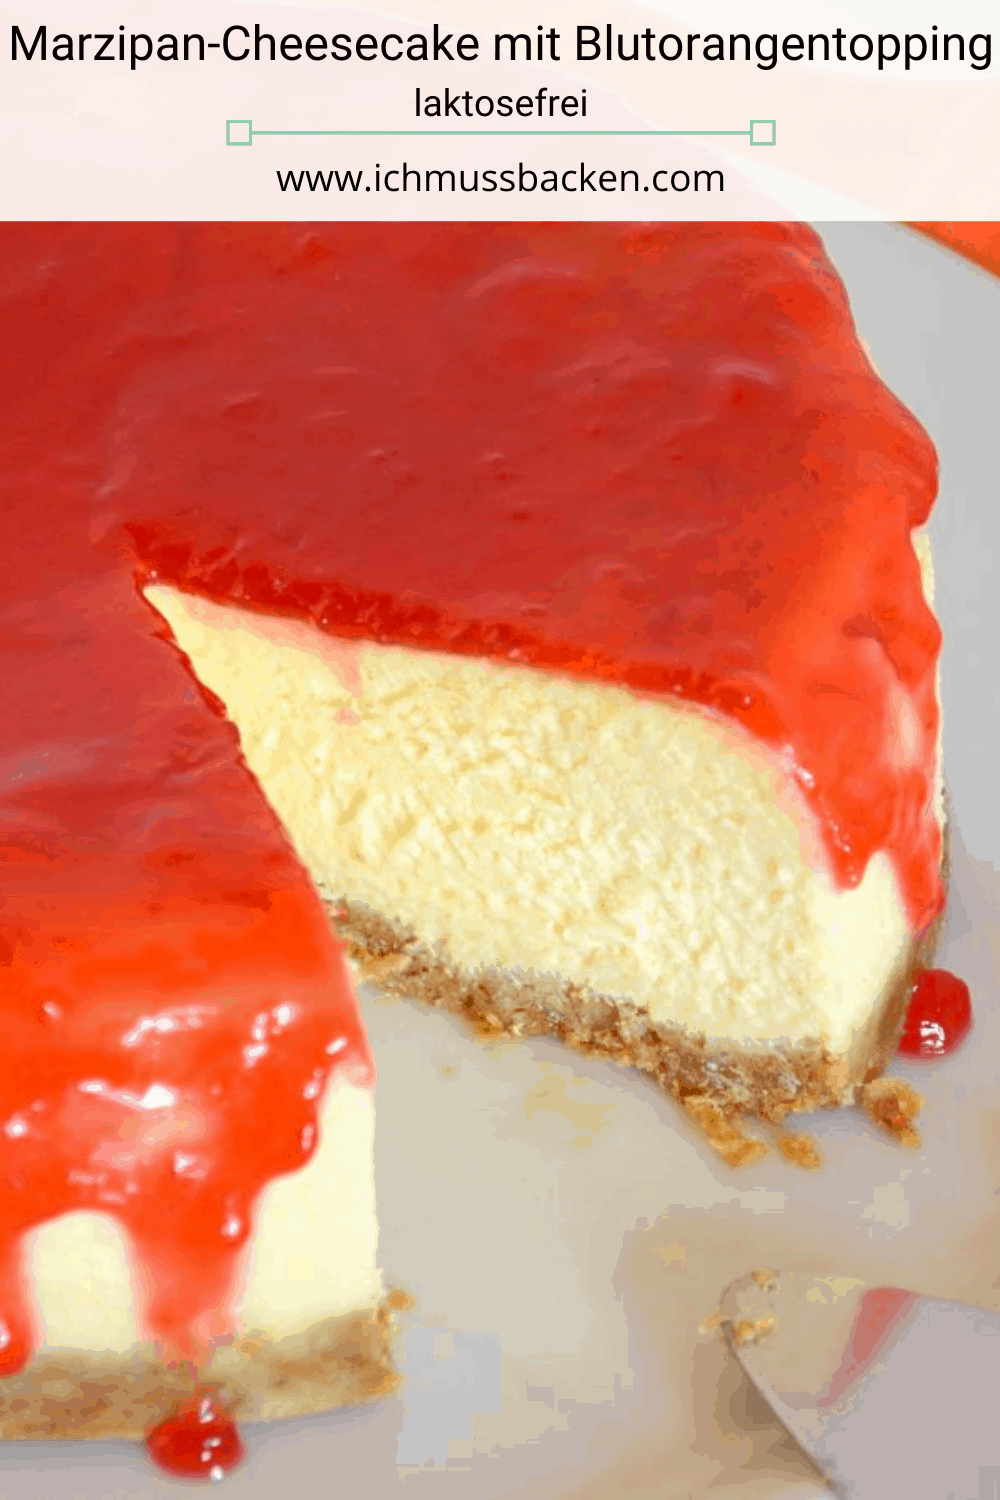 Marzipan-Cheesecake mit Blutorangentopping